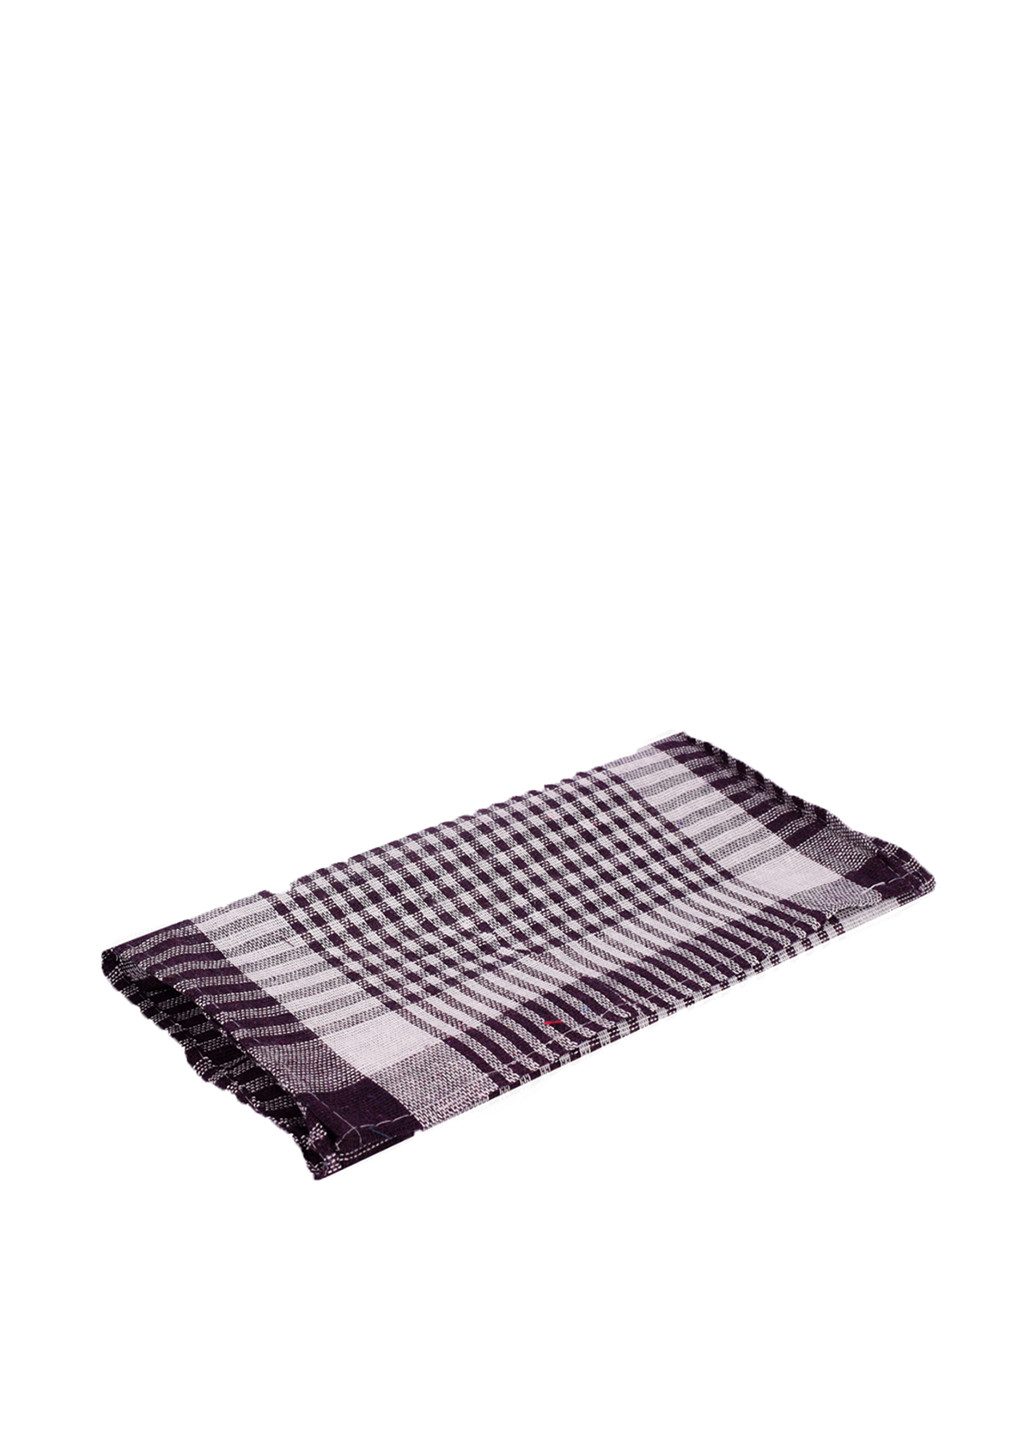 Koloco полотенце, 35х55 см клетка фиолетовый производство - Китай